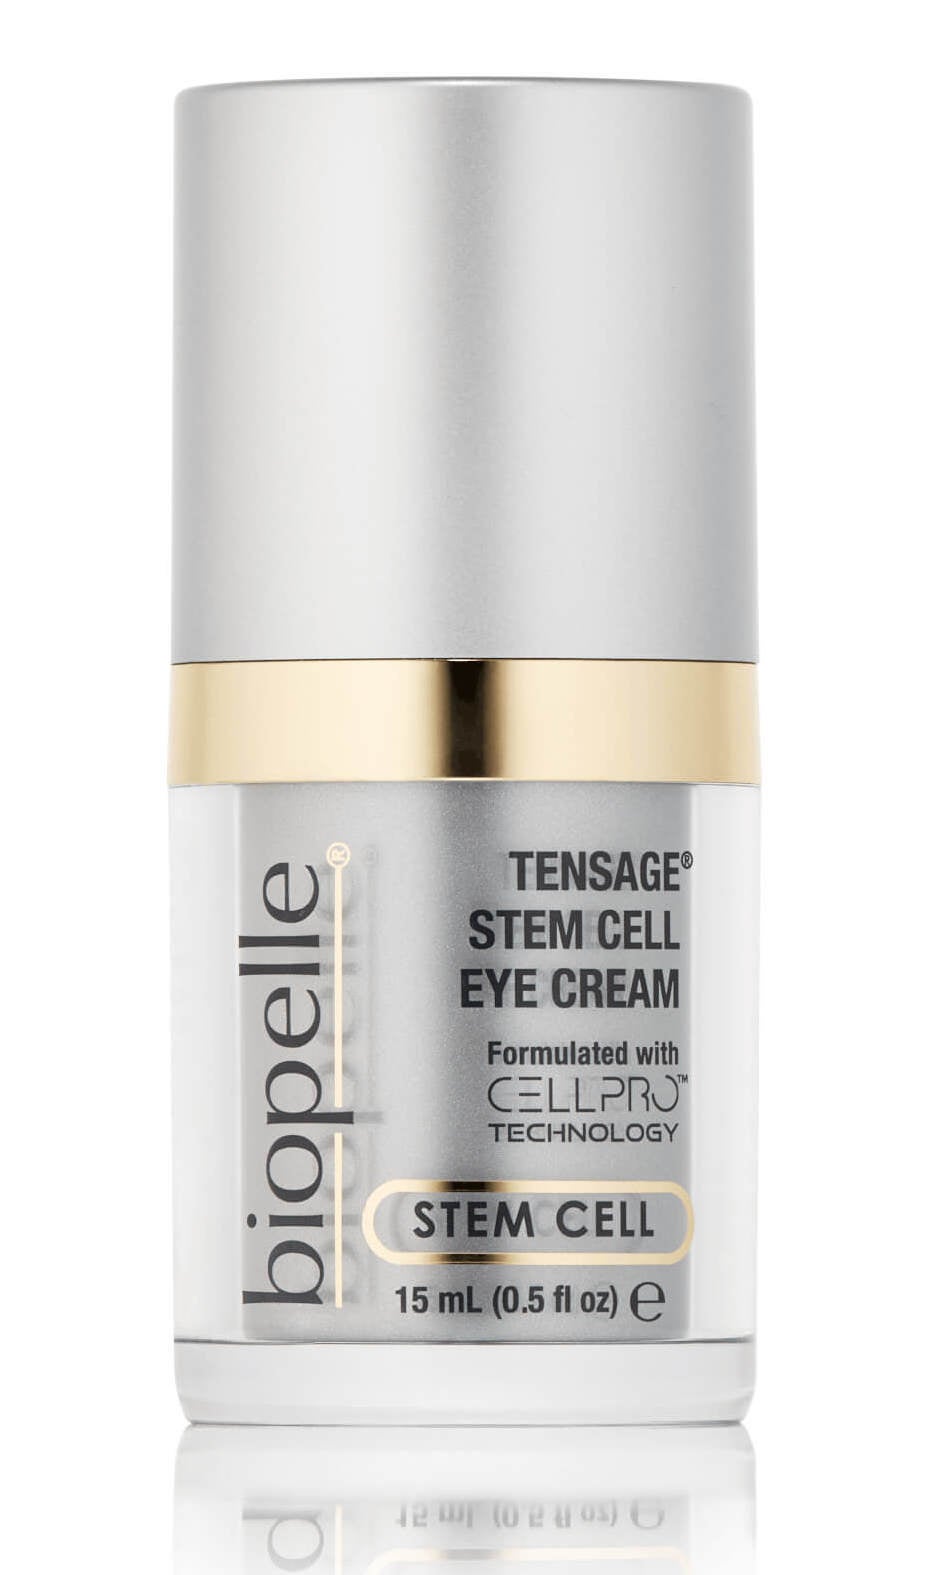 Biopelle Tensage Stem Cell Eye Cream